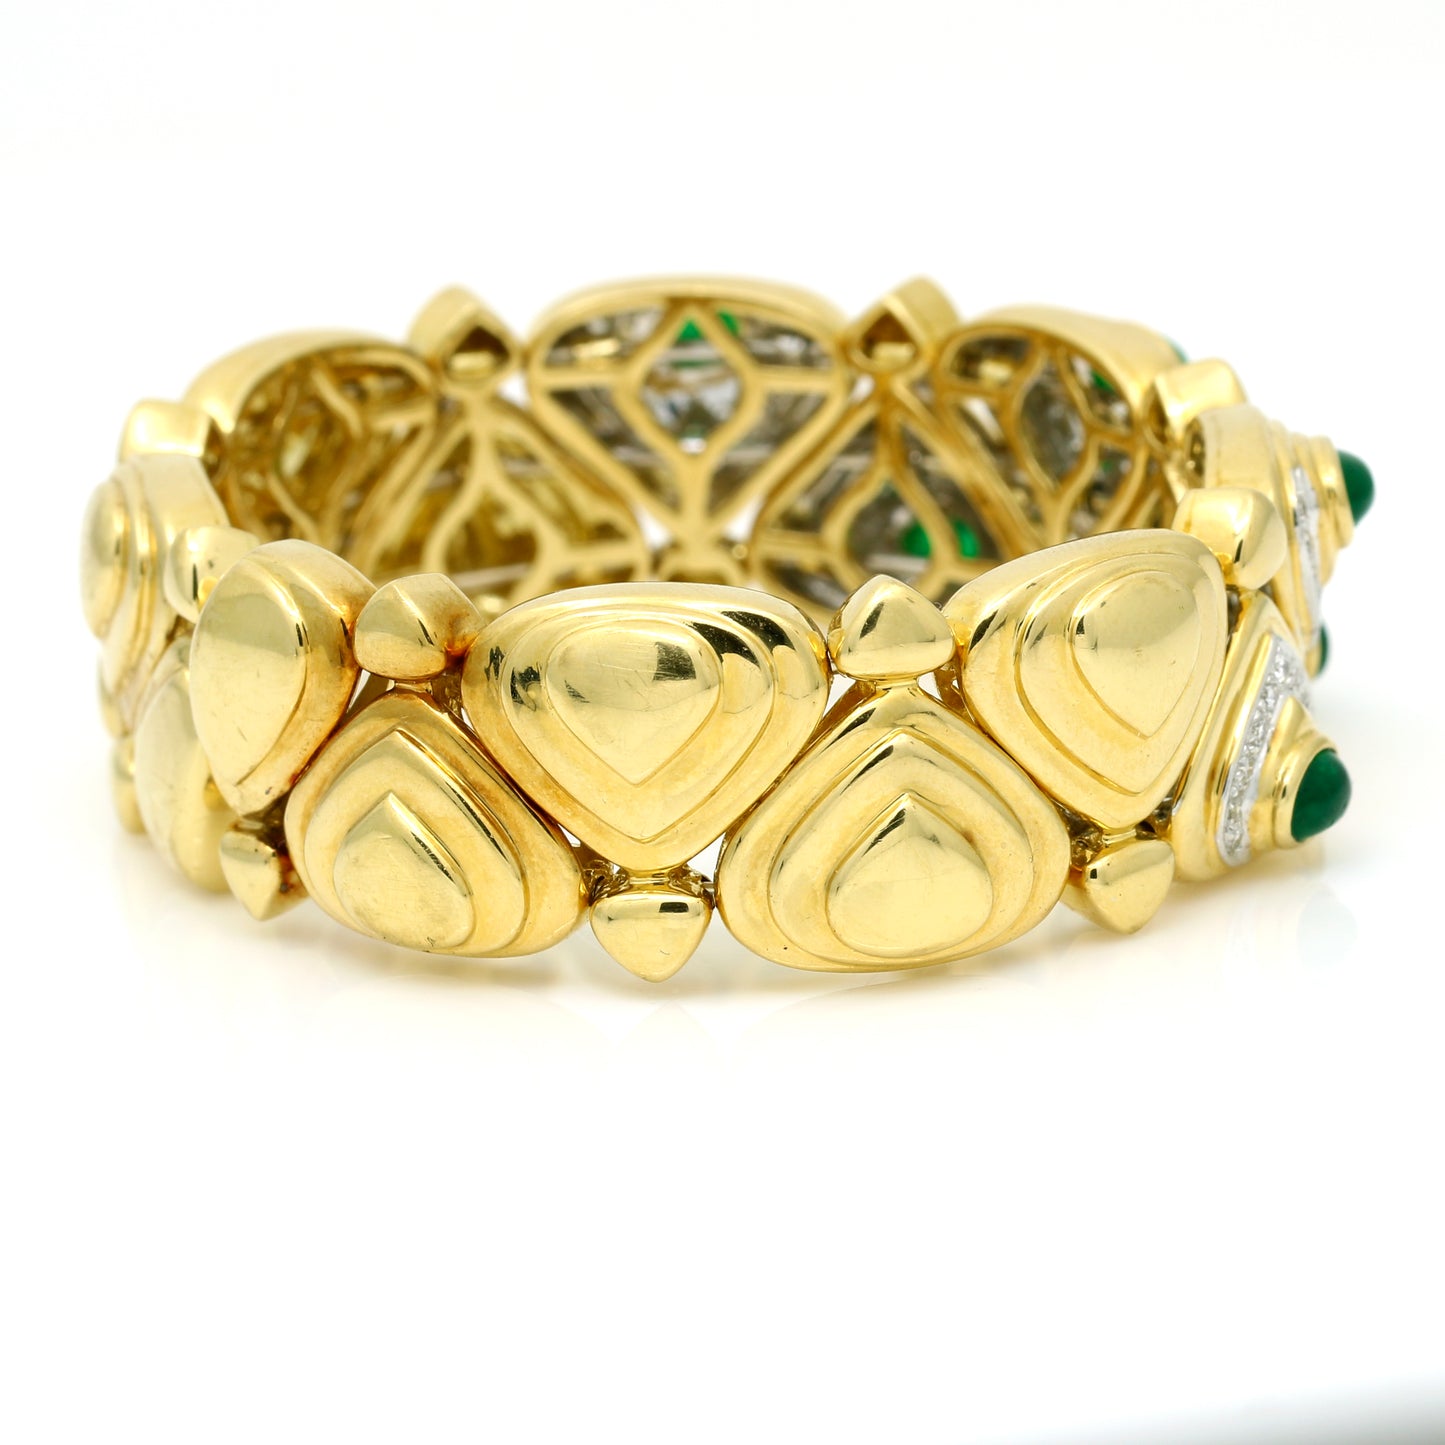 Women's Emerald and Diamond Cuff Bangle Statement Bracelet in 18k Yellow Gold